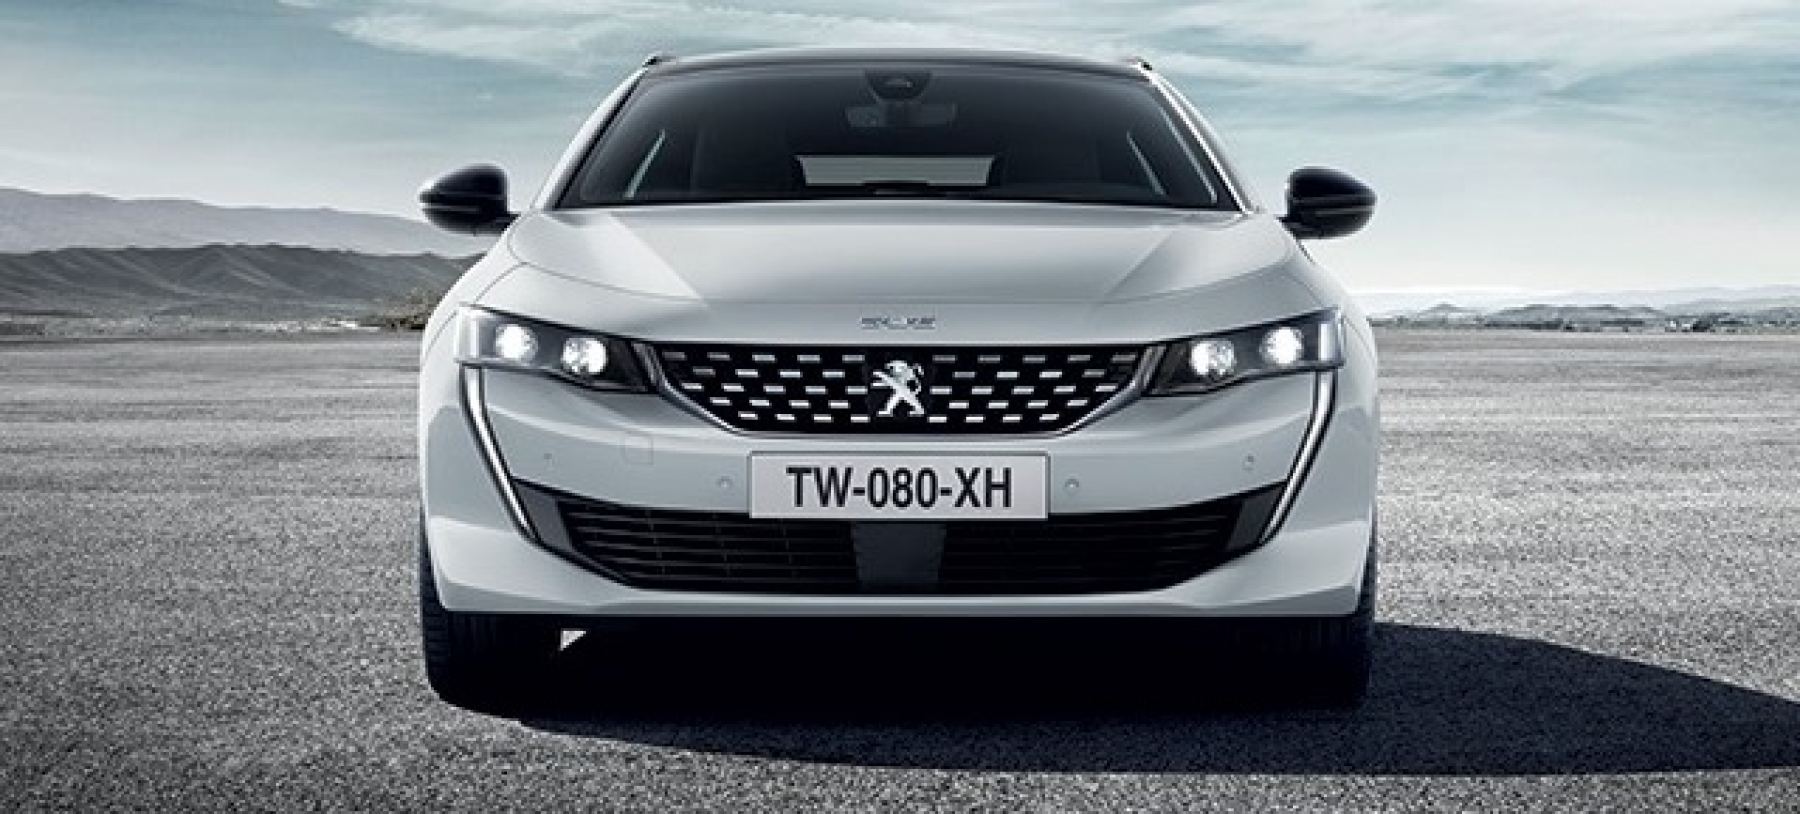 H Peugeot στην έκθεση “Αυτοκίνηση Anytime 2019”